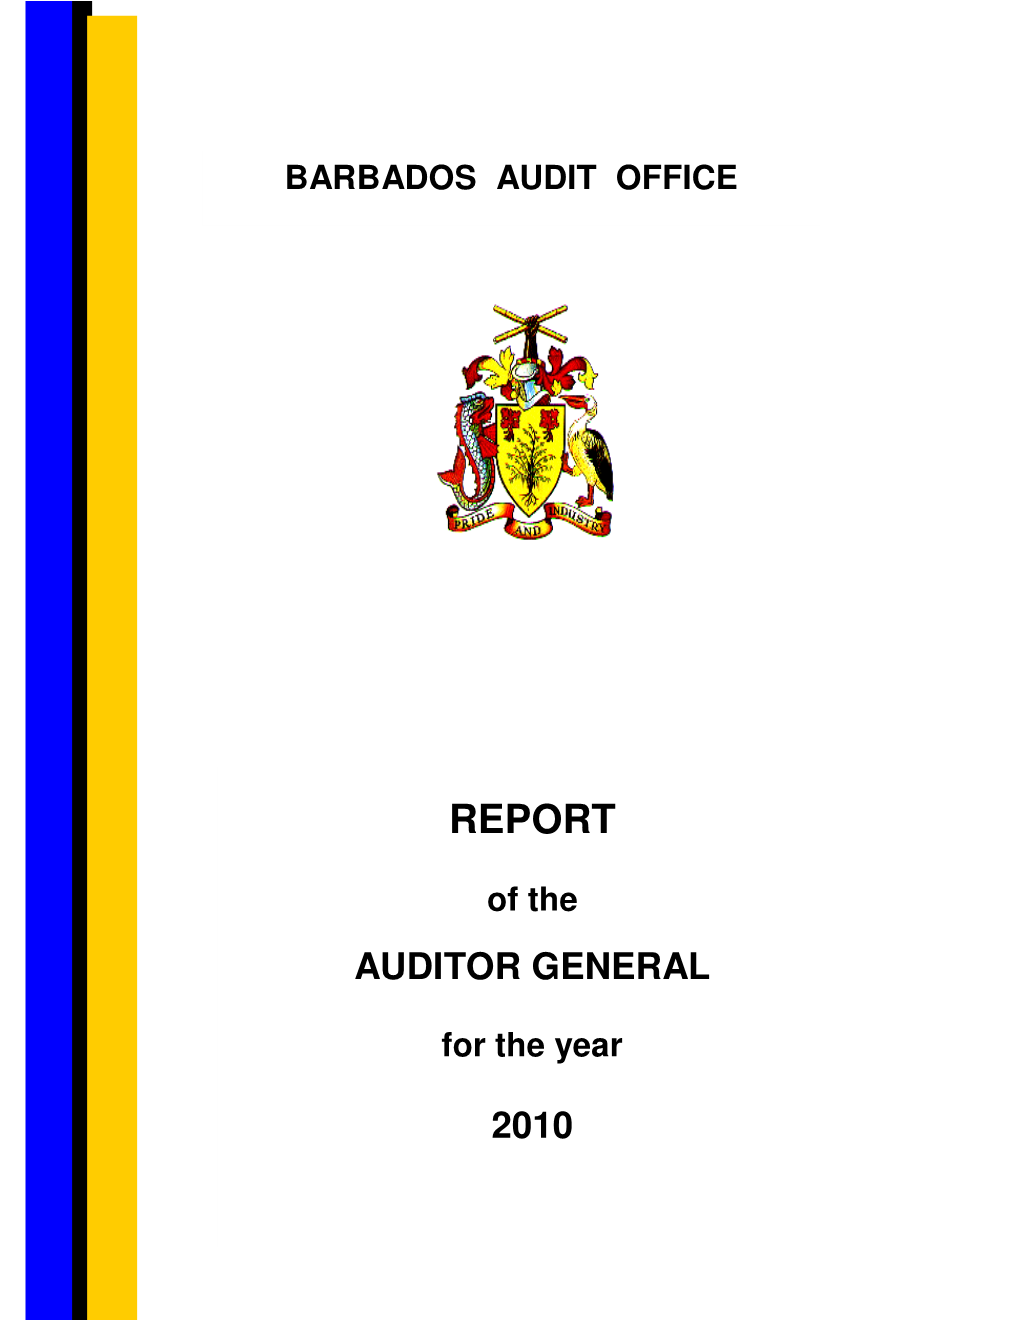 Auditor General Report